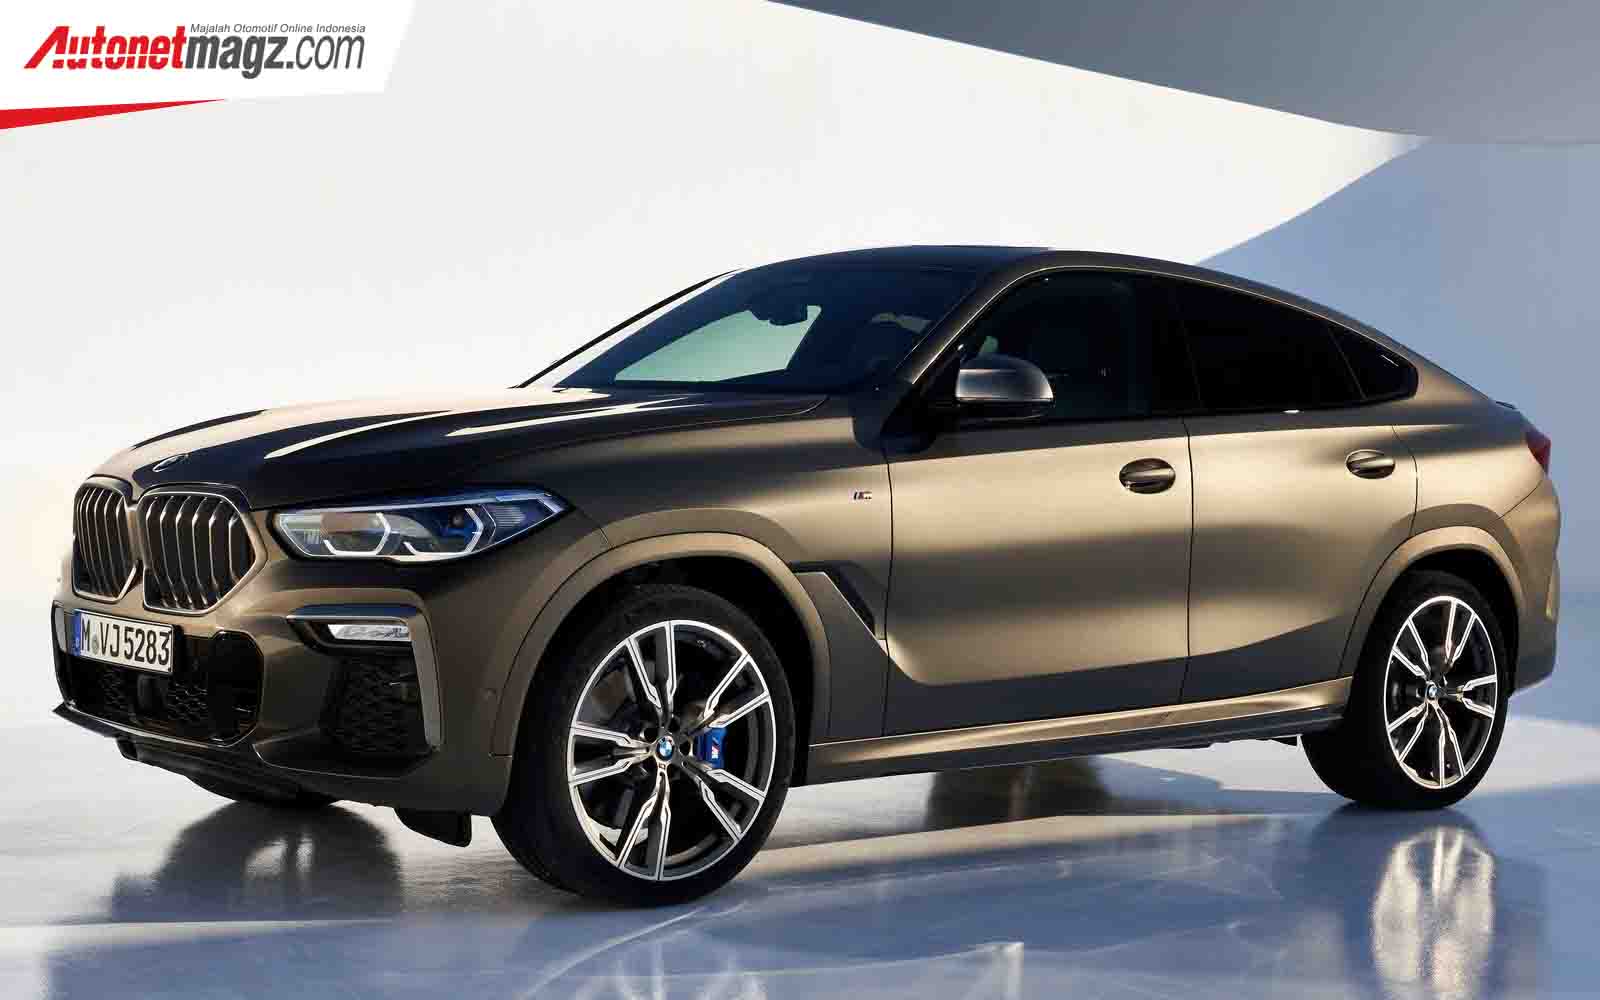 Berita, Spek New BMW X6 G06: New BMW X6 G06 Resmi Diperkenalkan, Bak 8-Series Versi Coupe SUV!